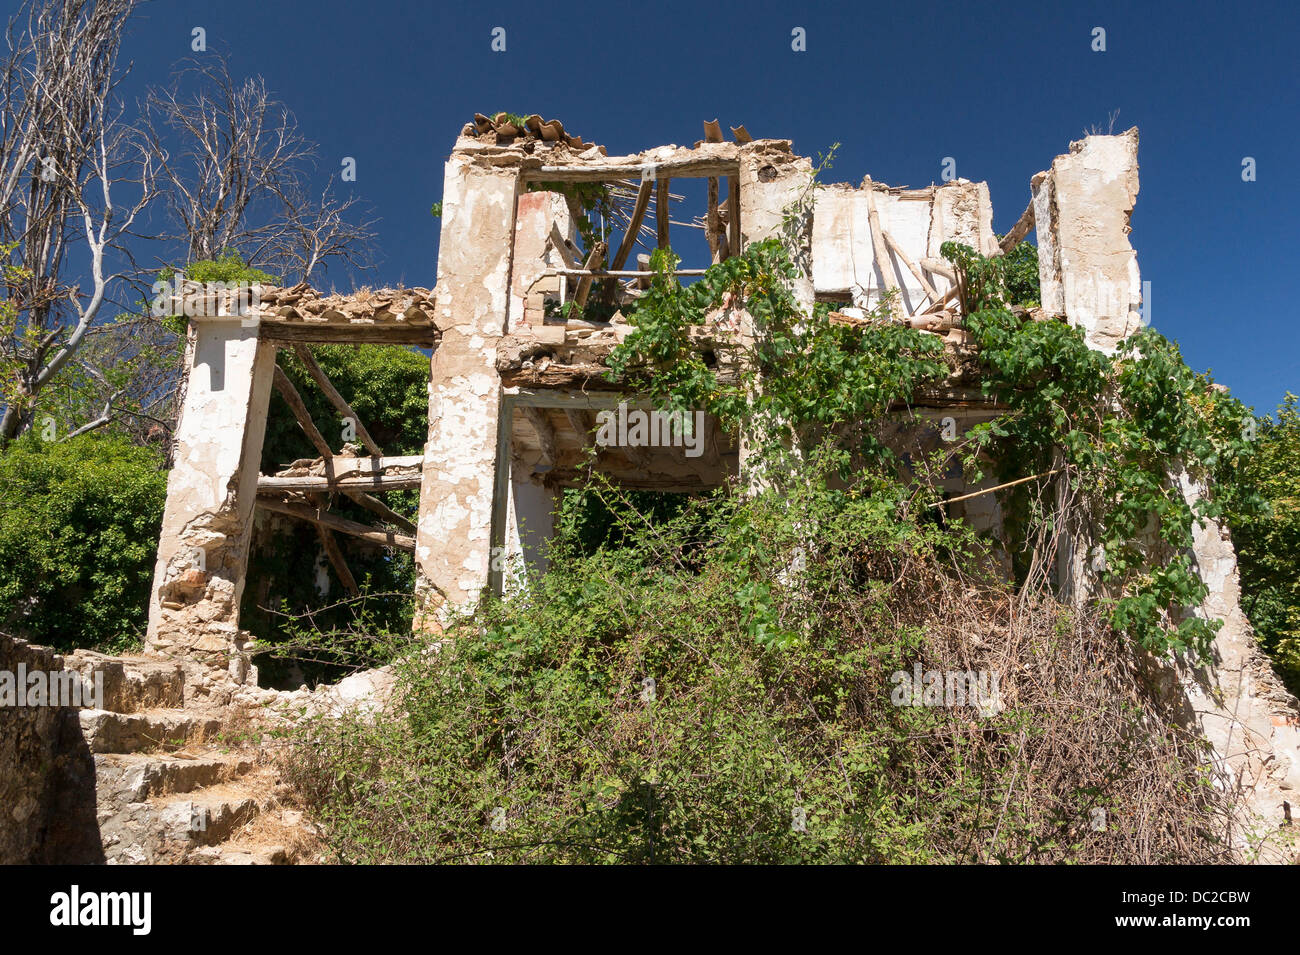 A ruined house, Riofrio, Loja, Andalusia, Spain. Stock Photo